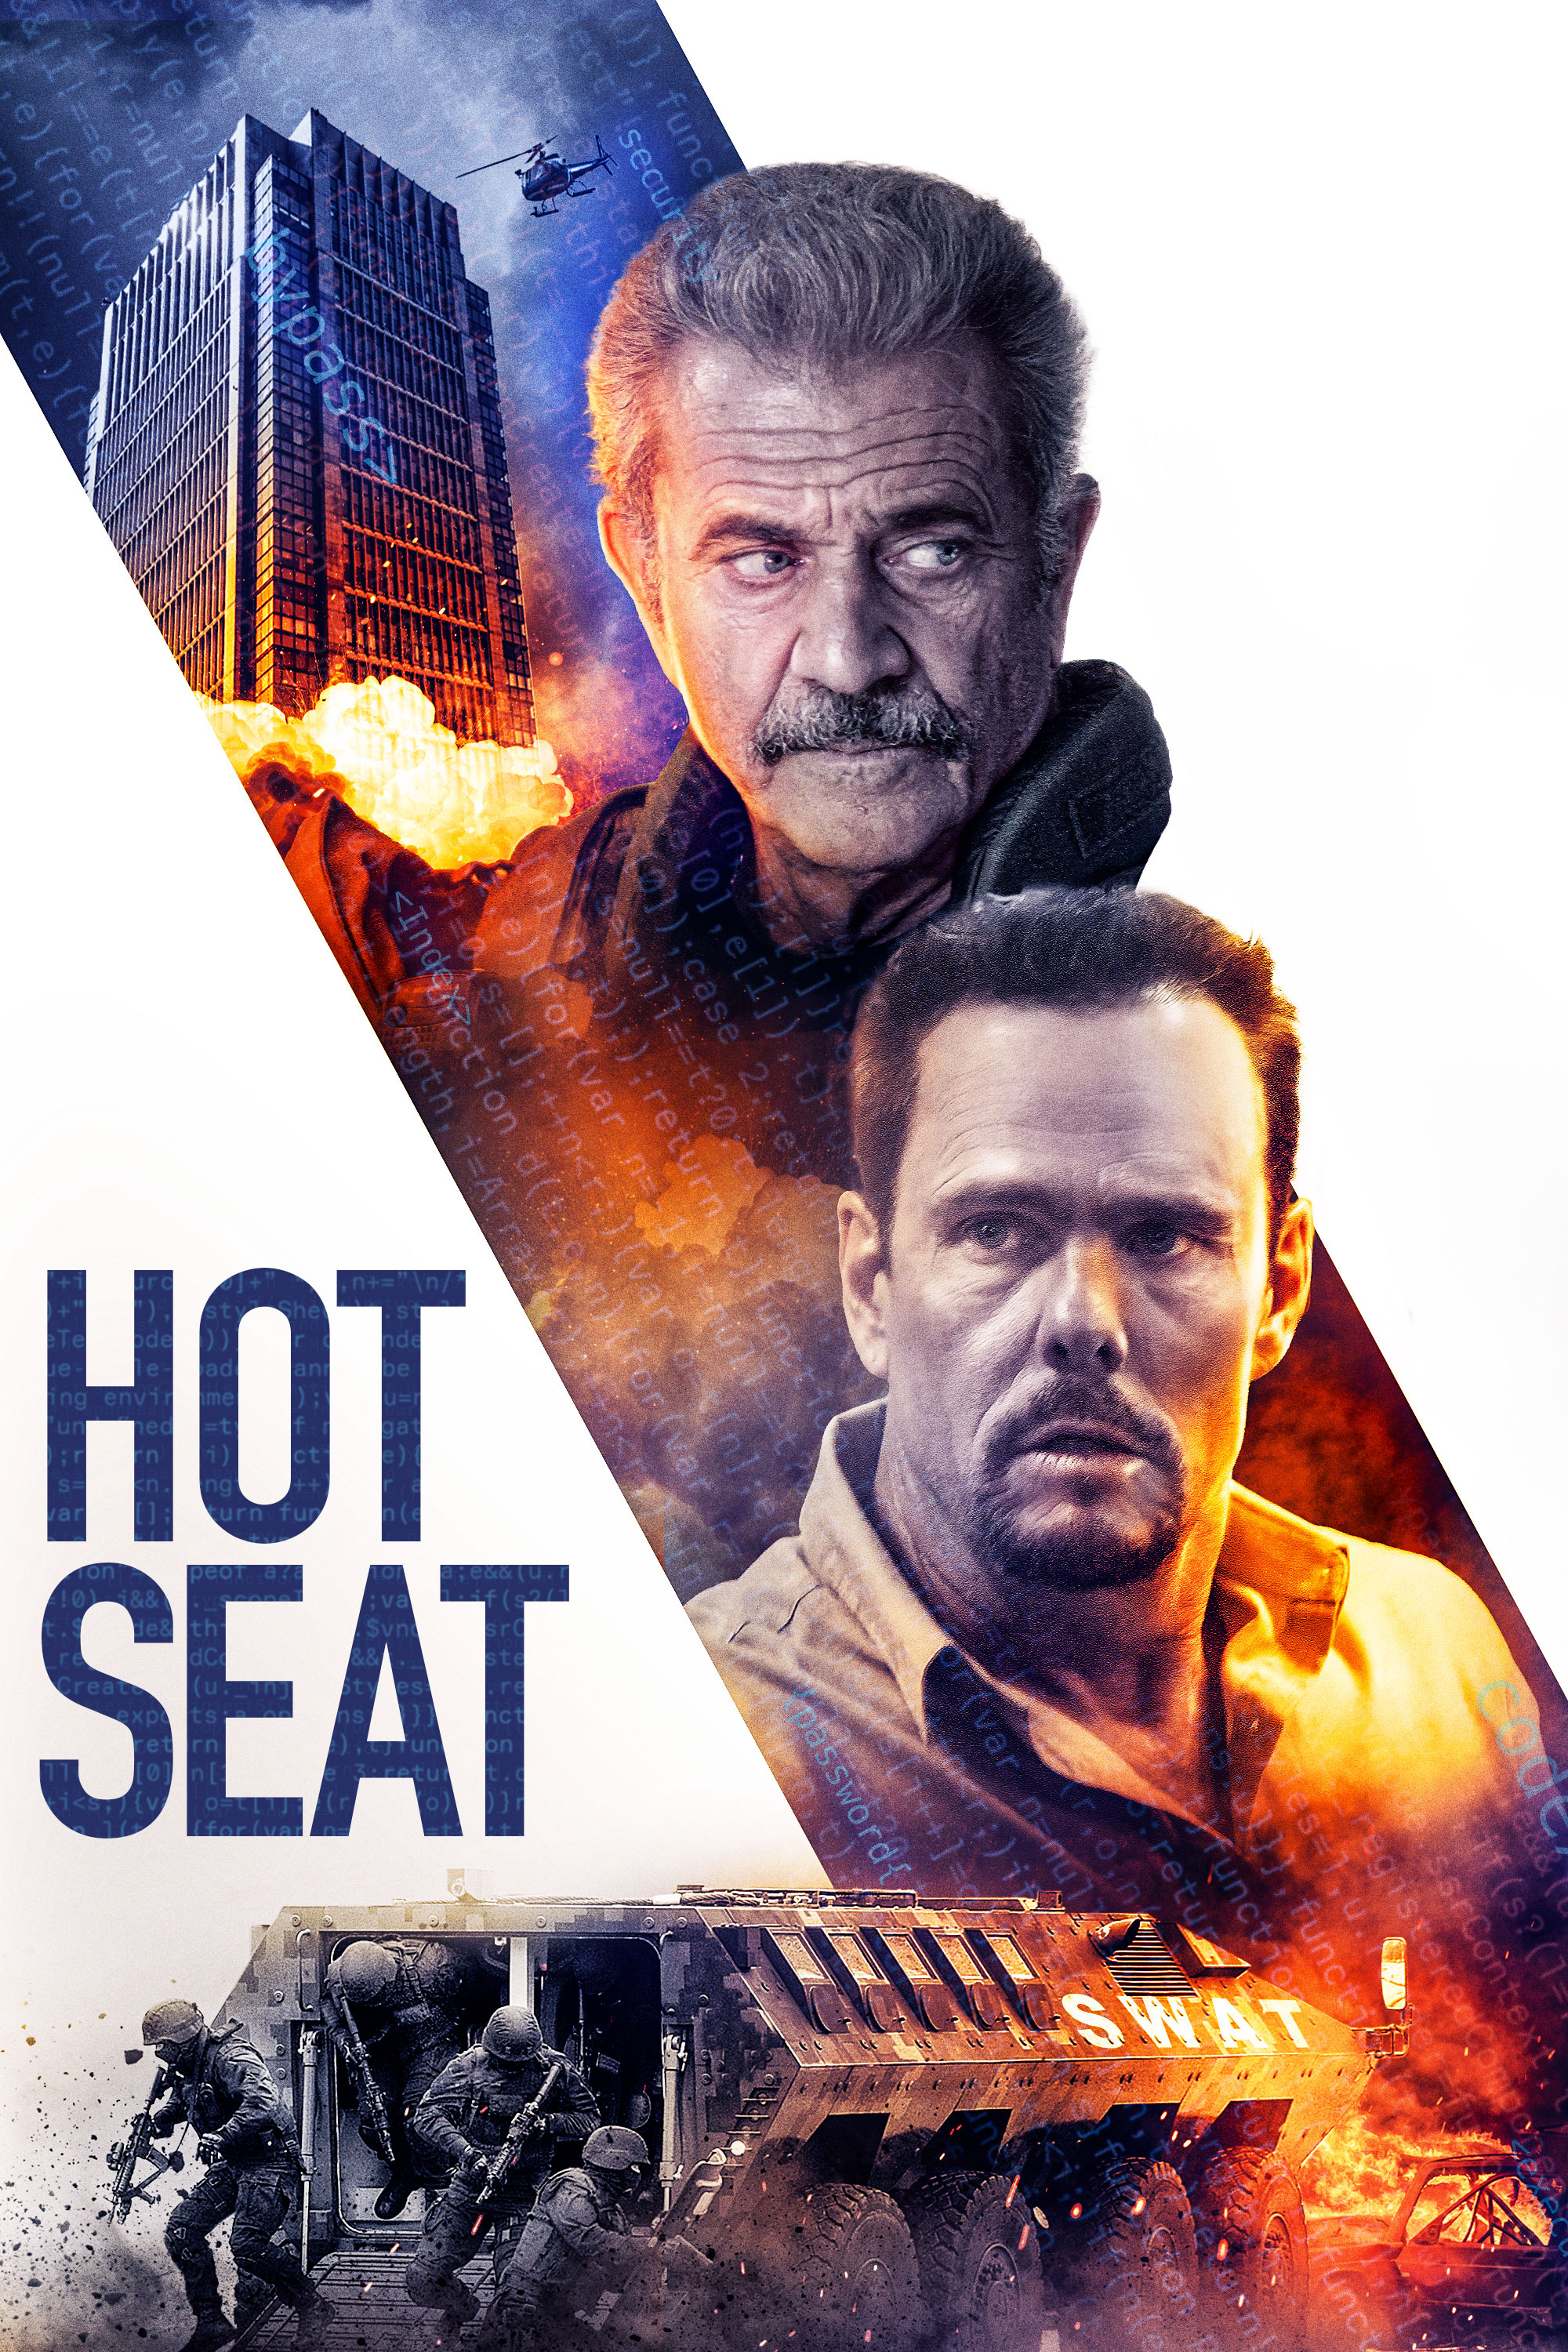 Stiahni si Filmy CZ/SK dabing  Horké křeslo / Hot Seat (2022)(CZ)[WebRip][1080p] = CSFD 34%